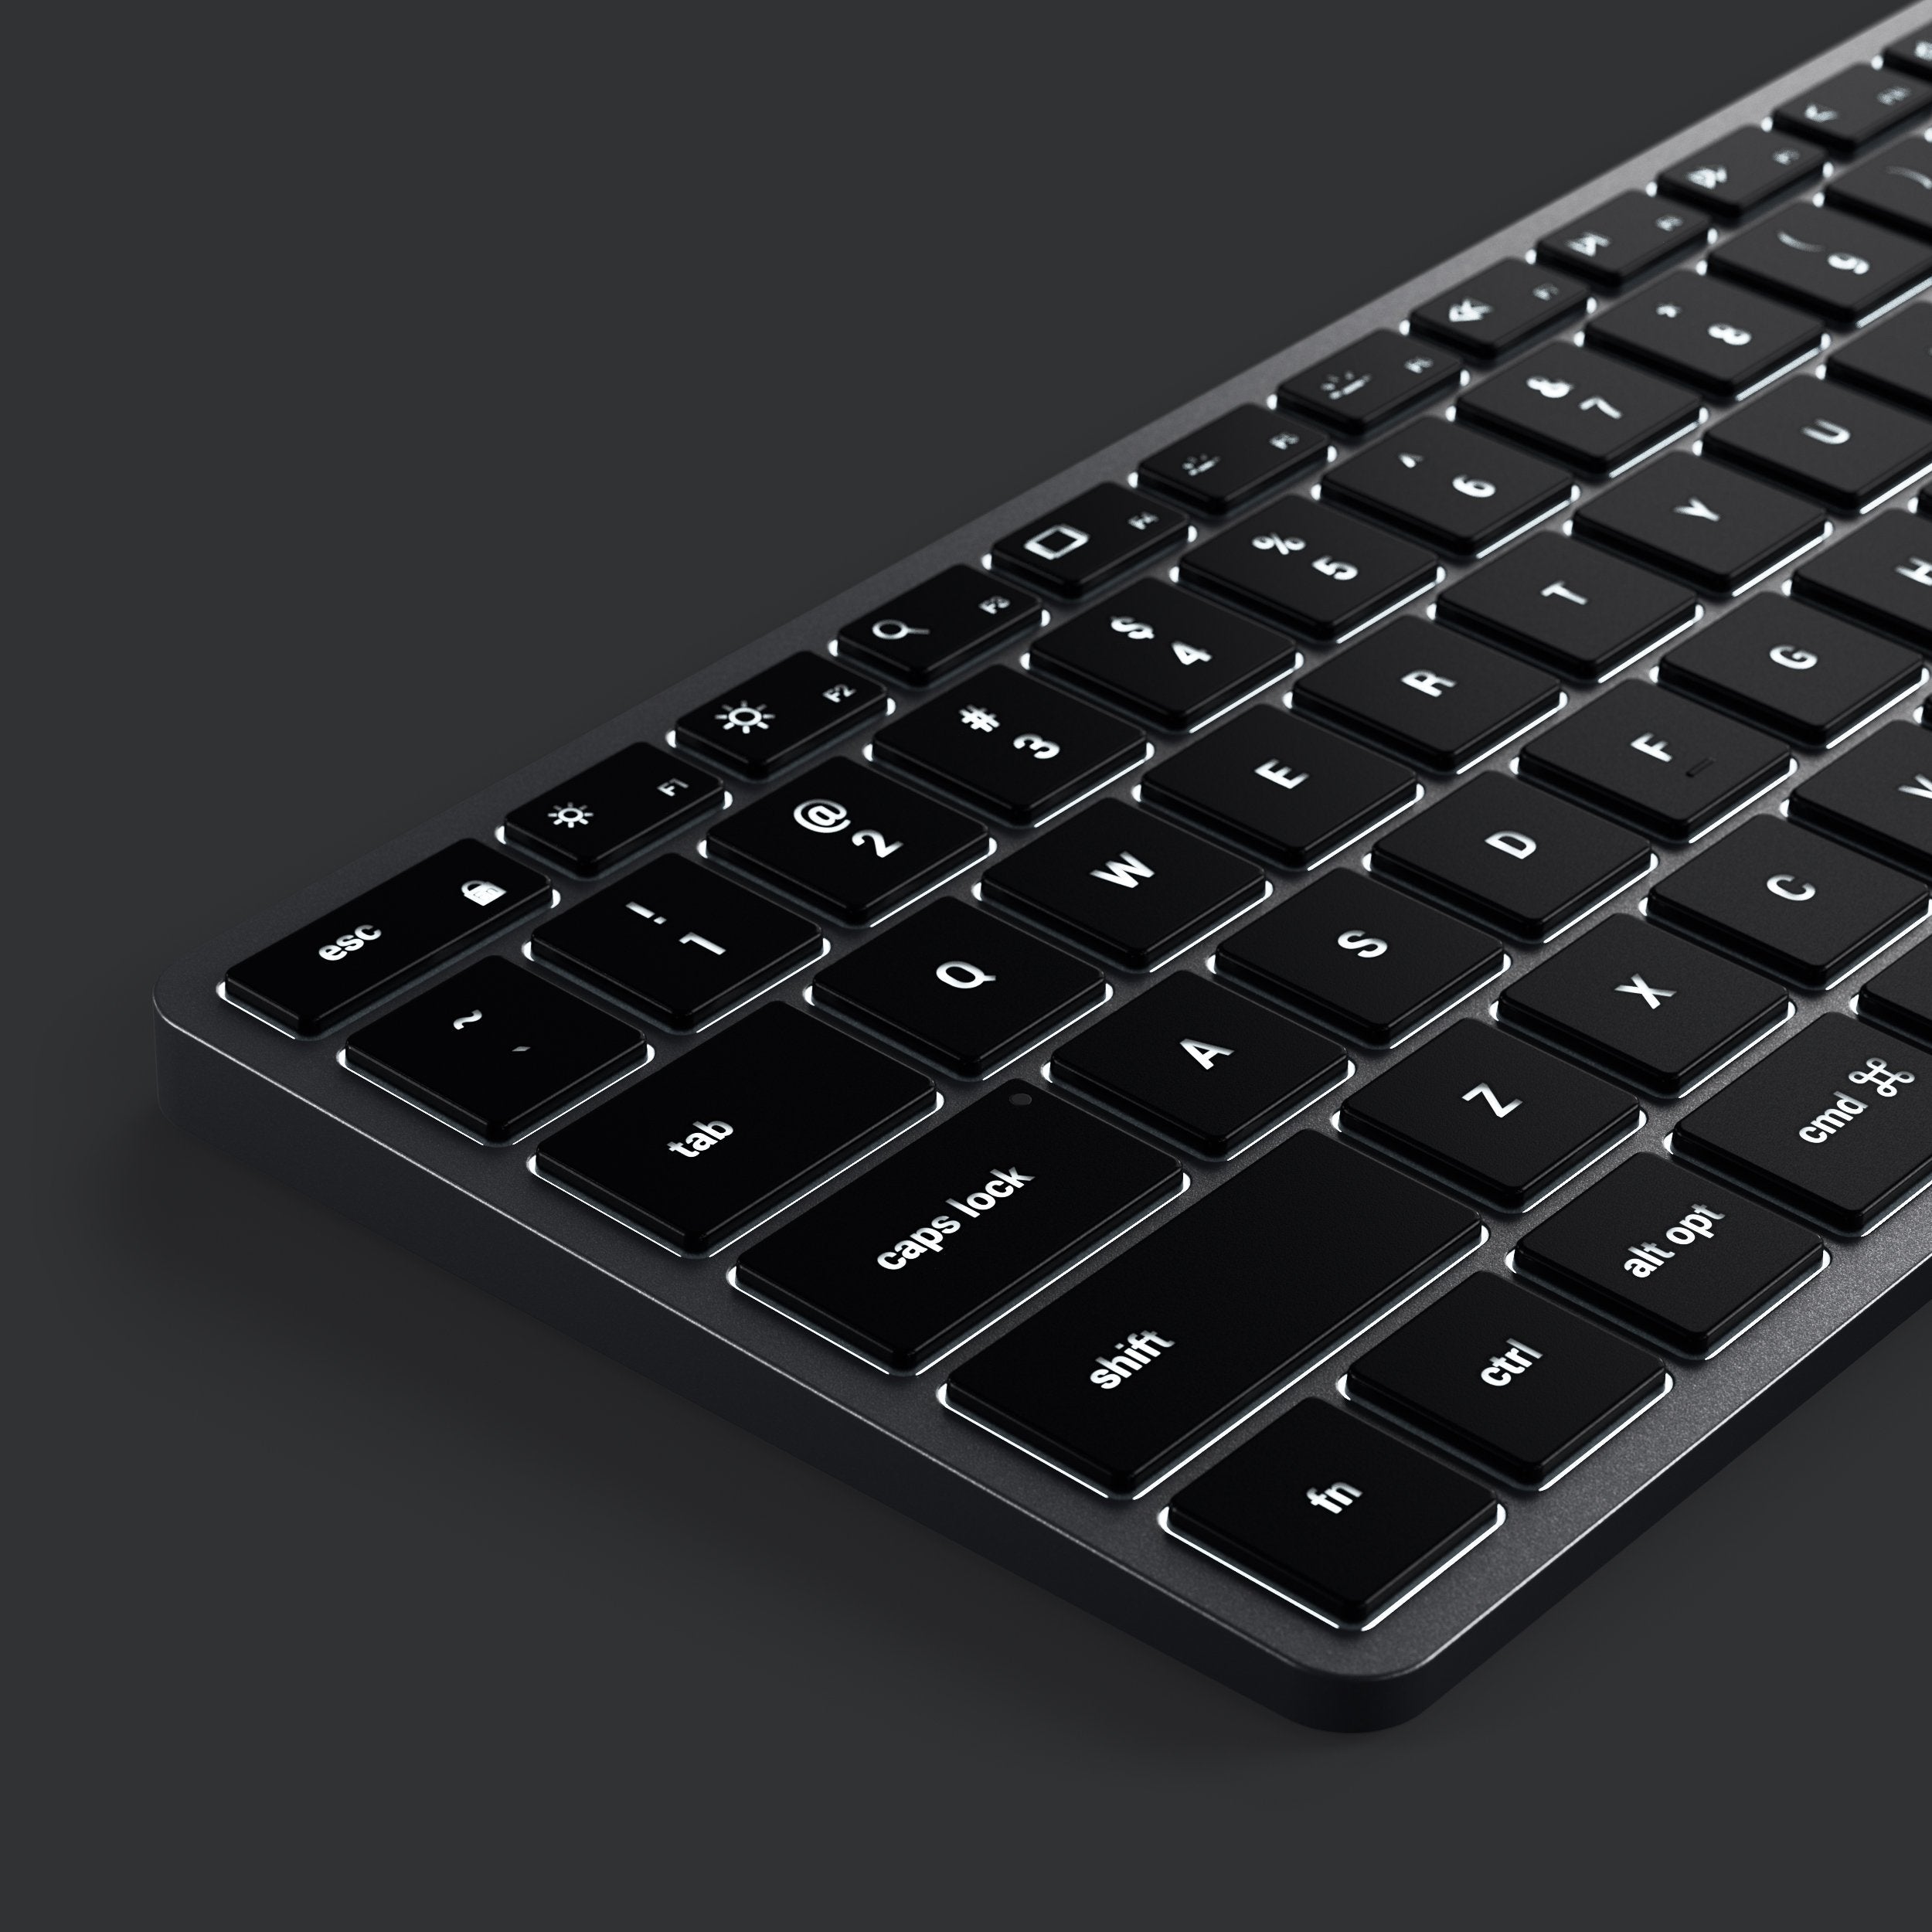 Slim X2 Bluetooth Backlit Keyboard | Computer Peripherals